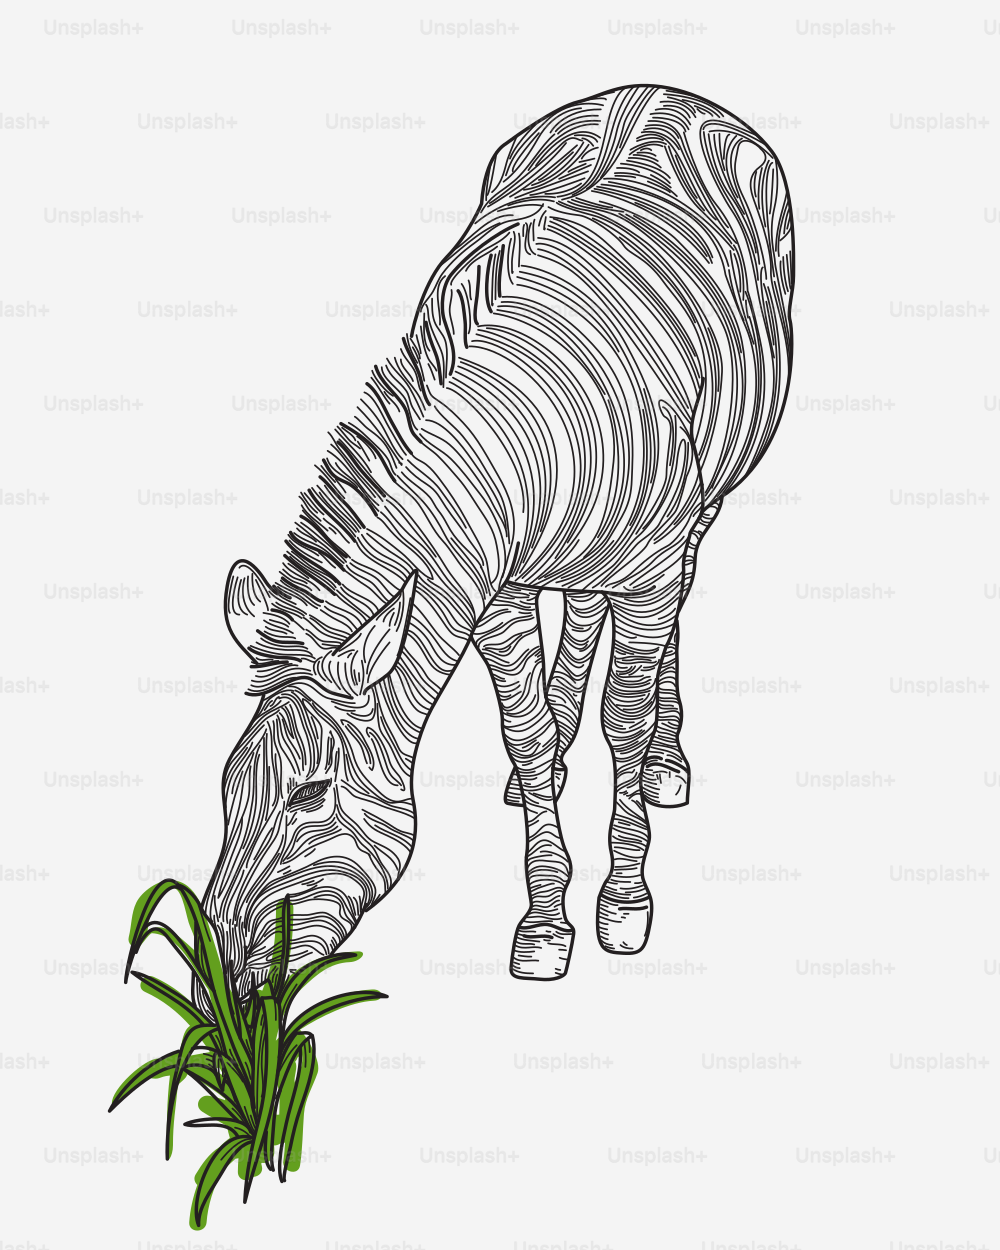 Line artwork of a zebra snacking on some grass.